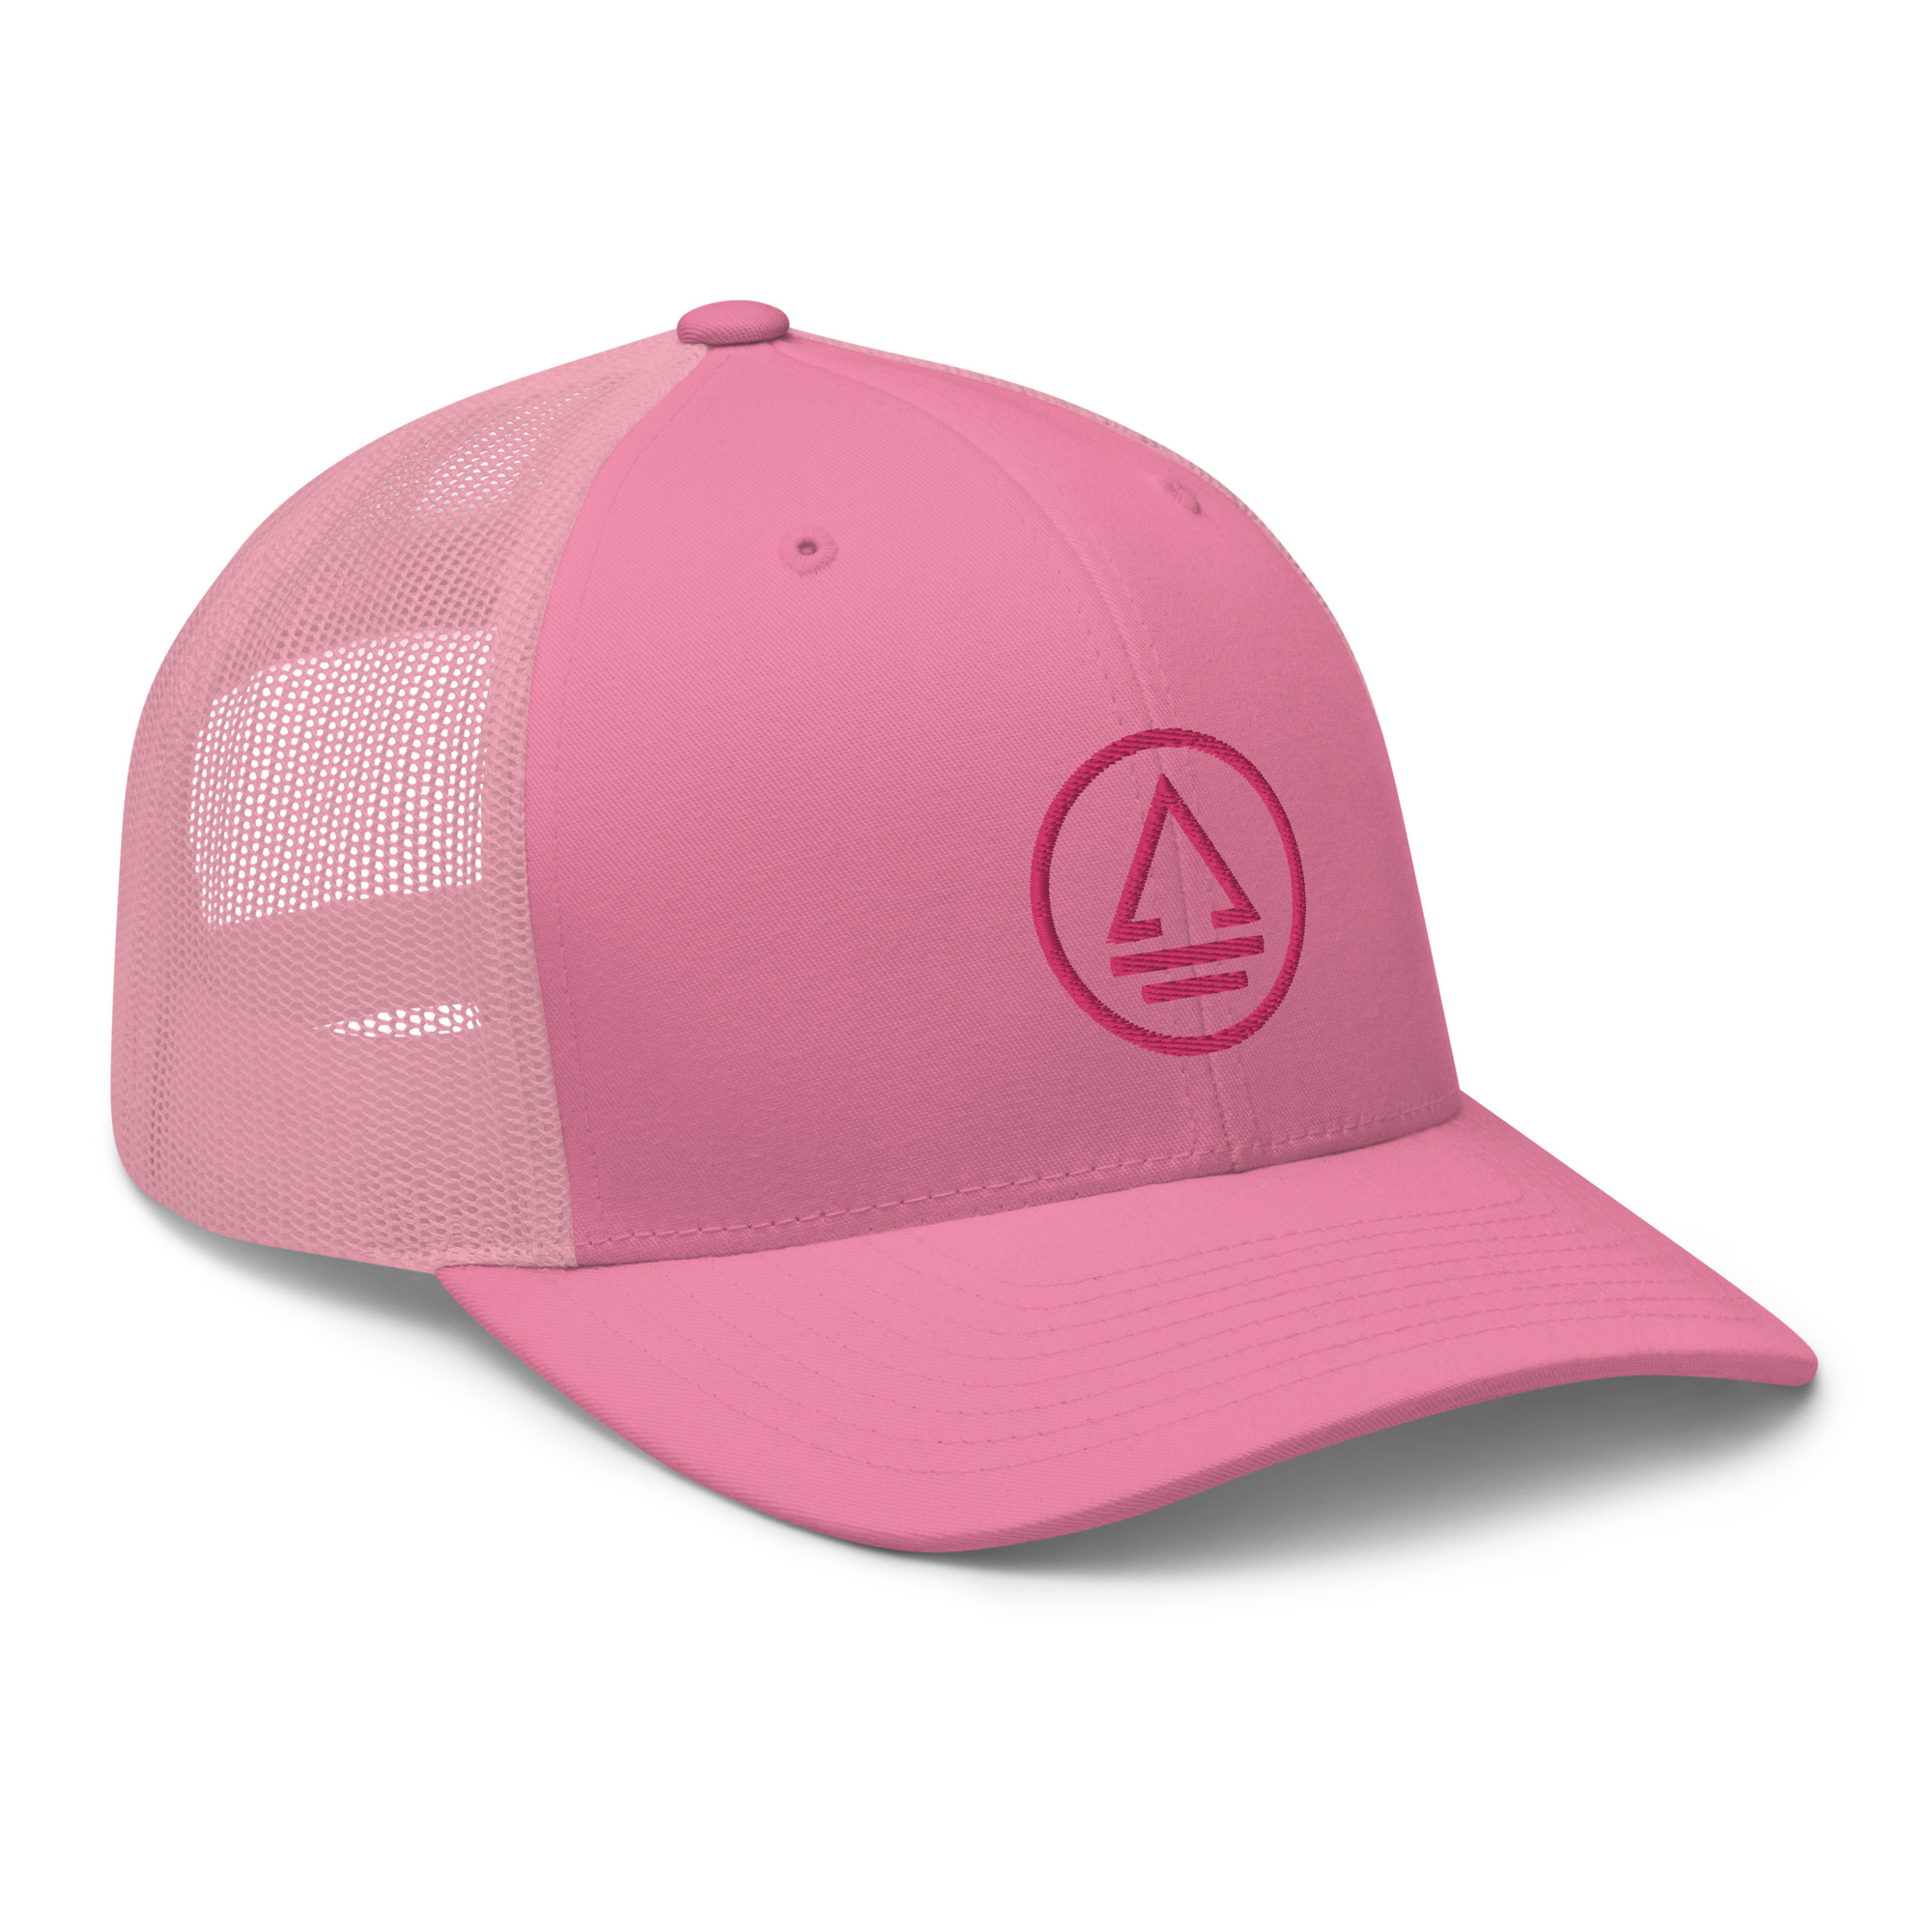 retro-trucker-hat-pink-right-front-64c9ab01701f2.jpg